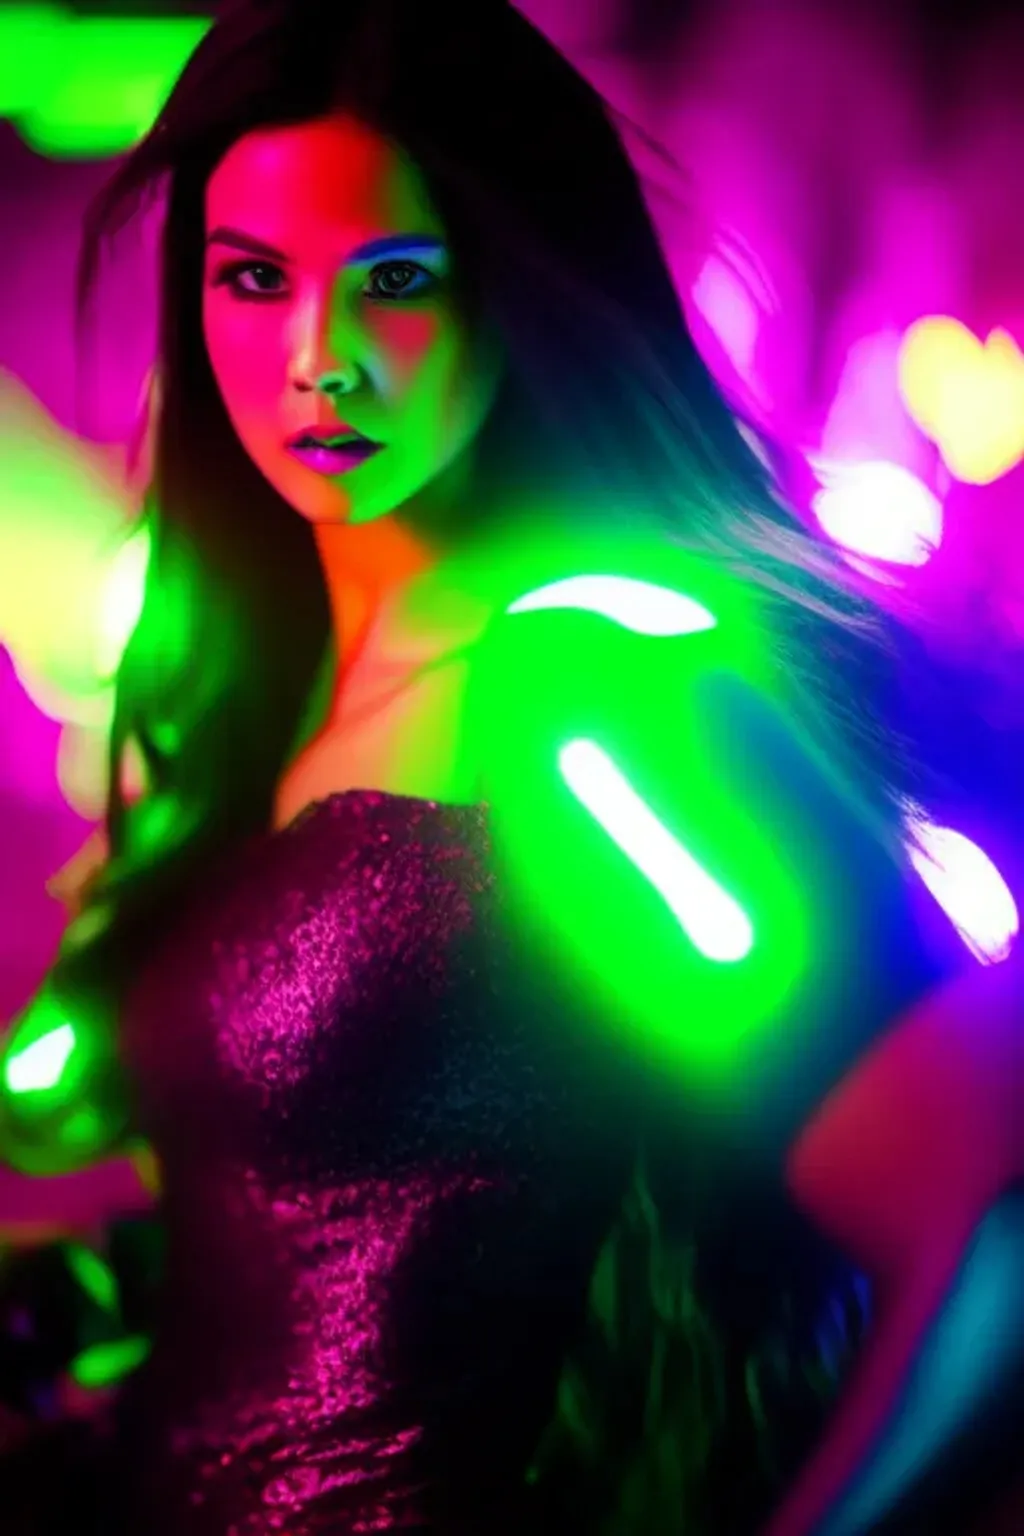 Prompt: Vivid Neon Colors, Portrait Photo of a Women Superhero, medium shot, highly detailed, 